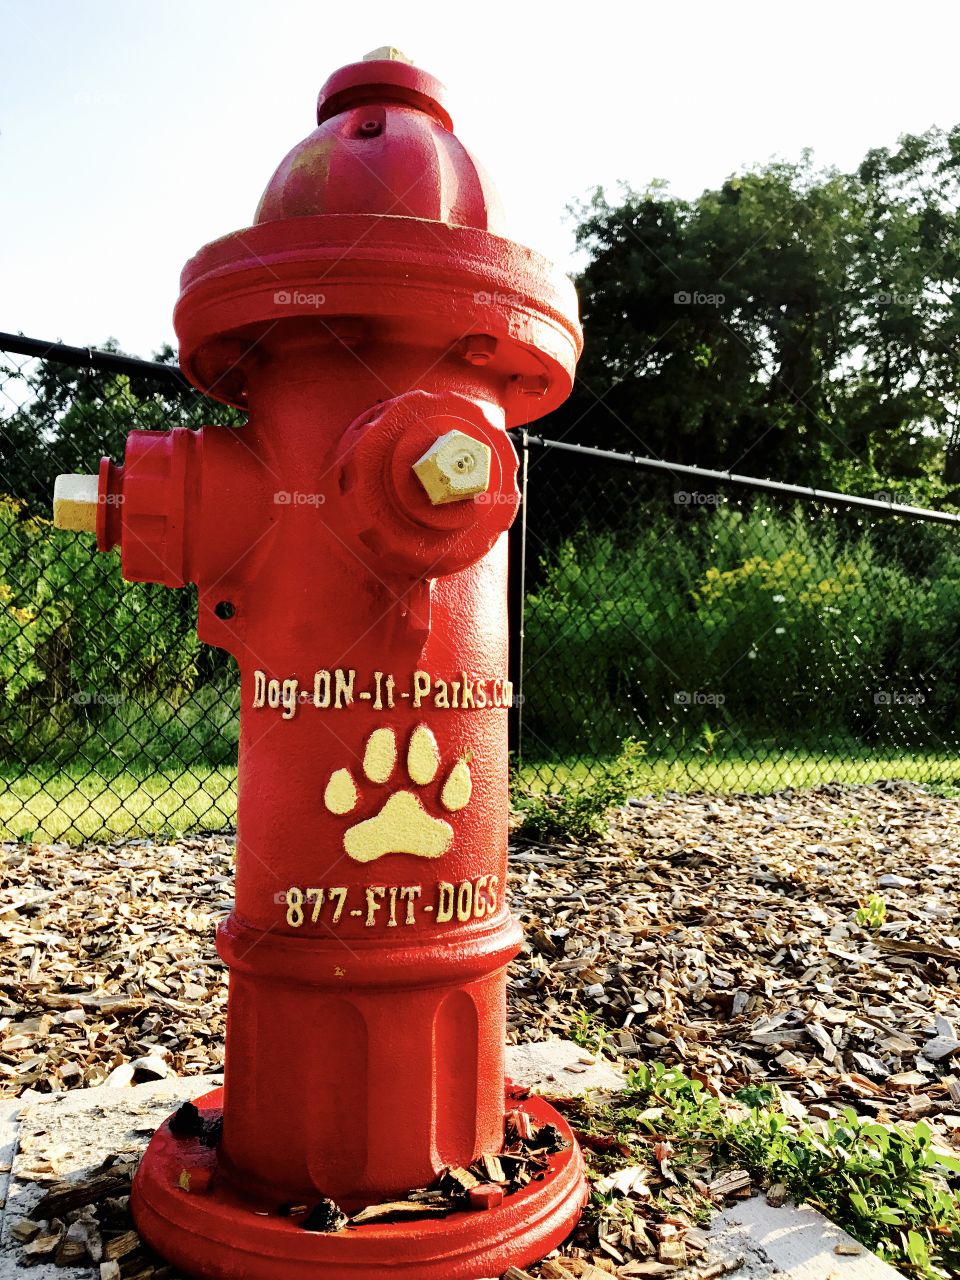 Dog park, fire hydrant 